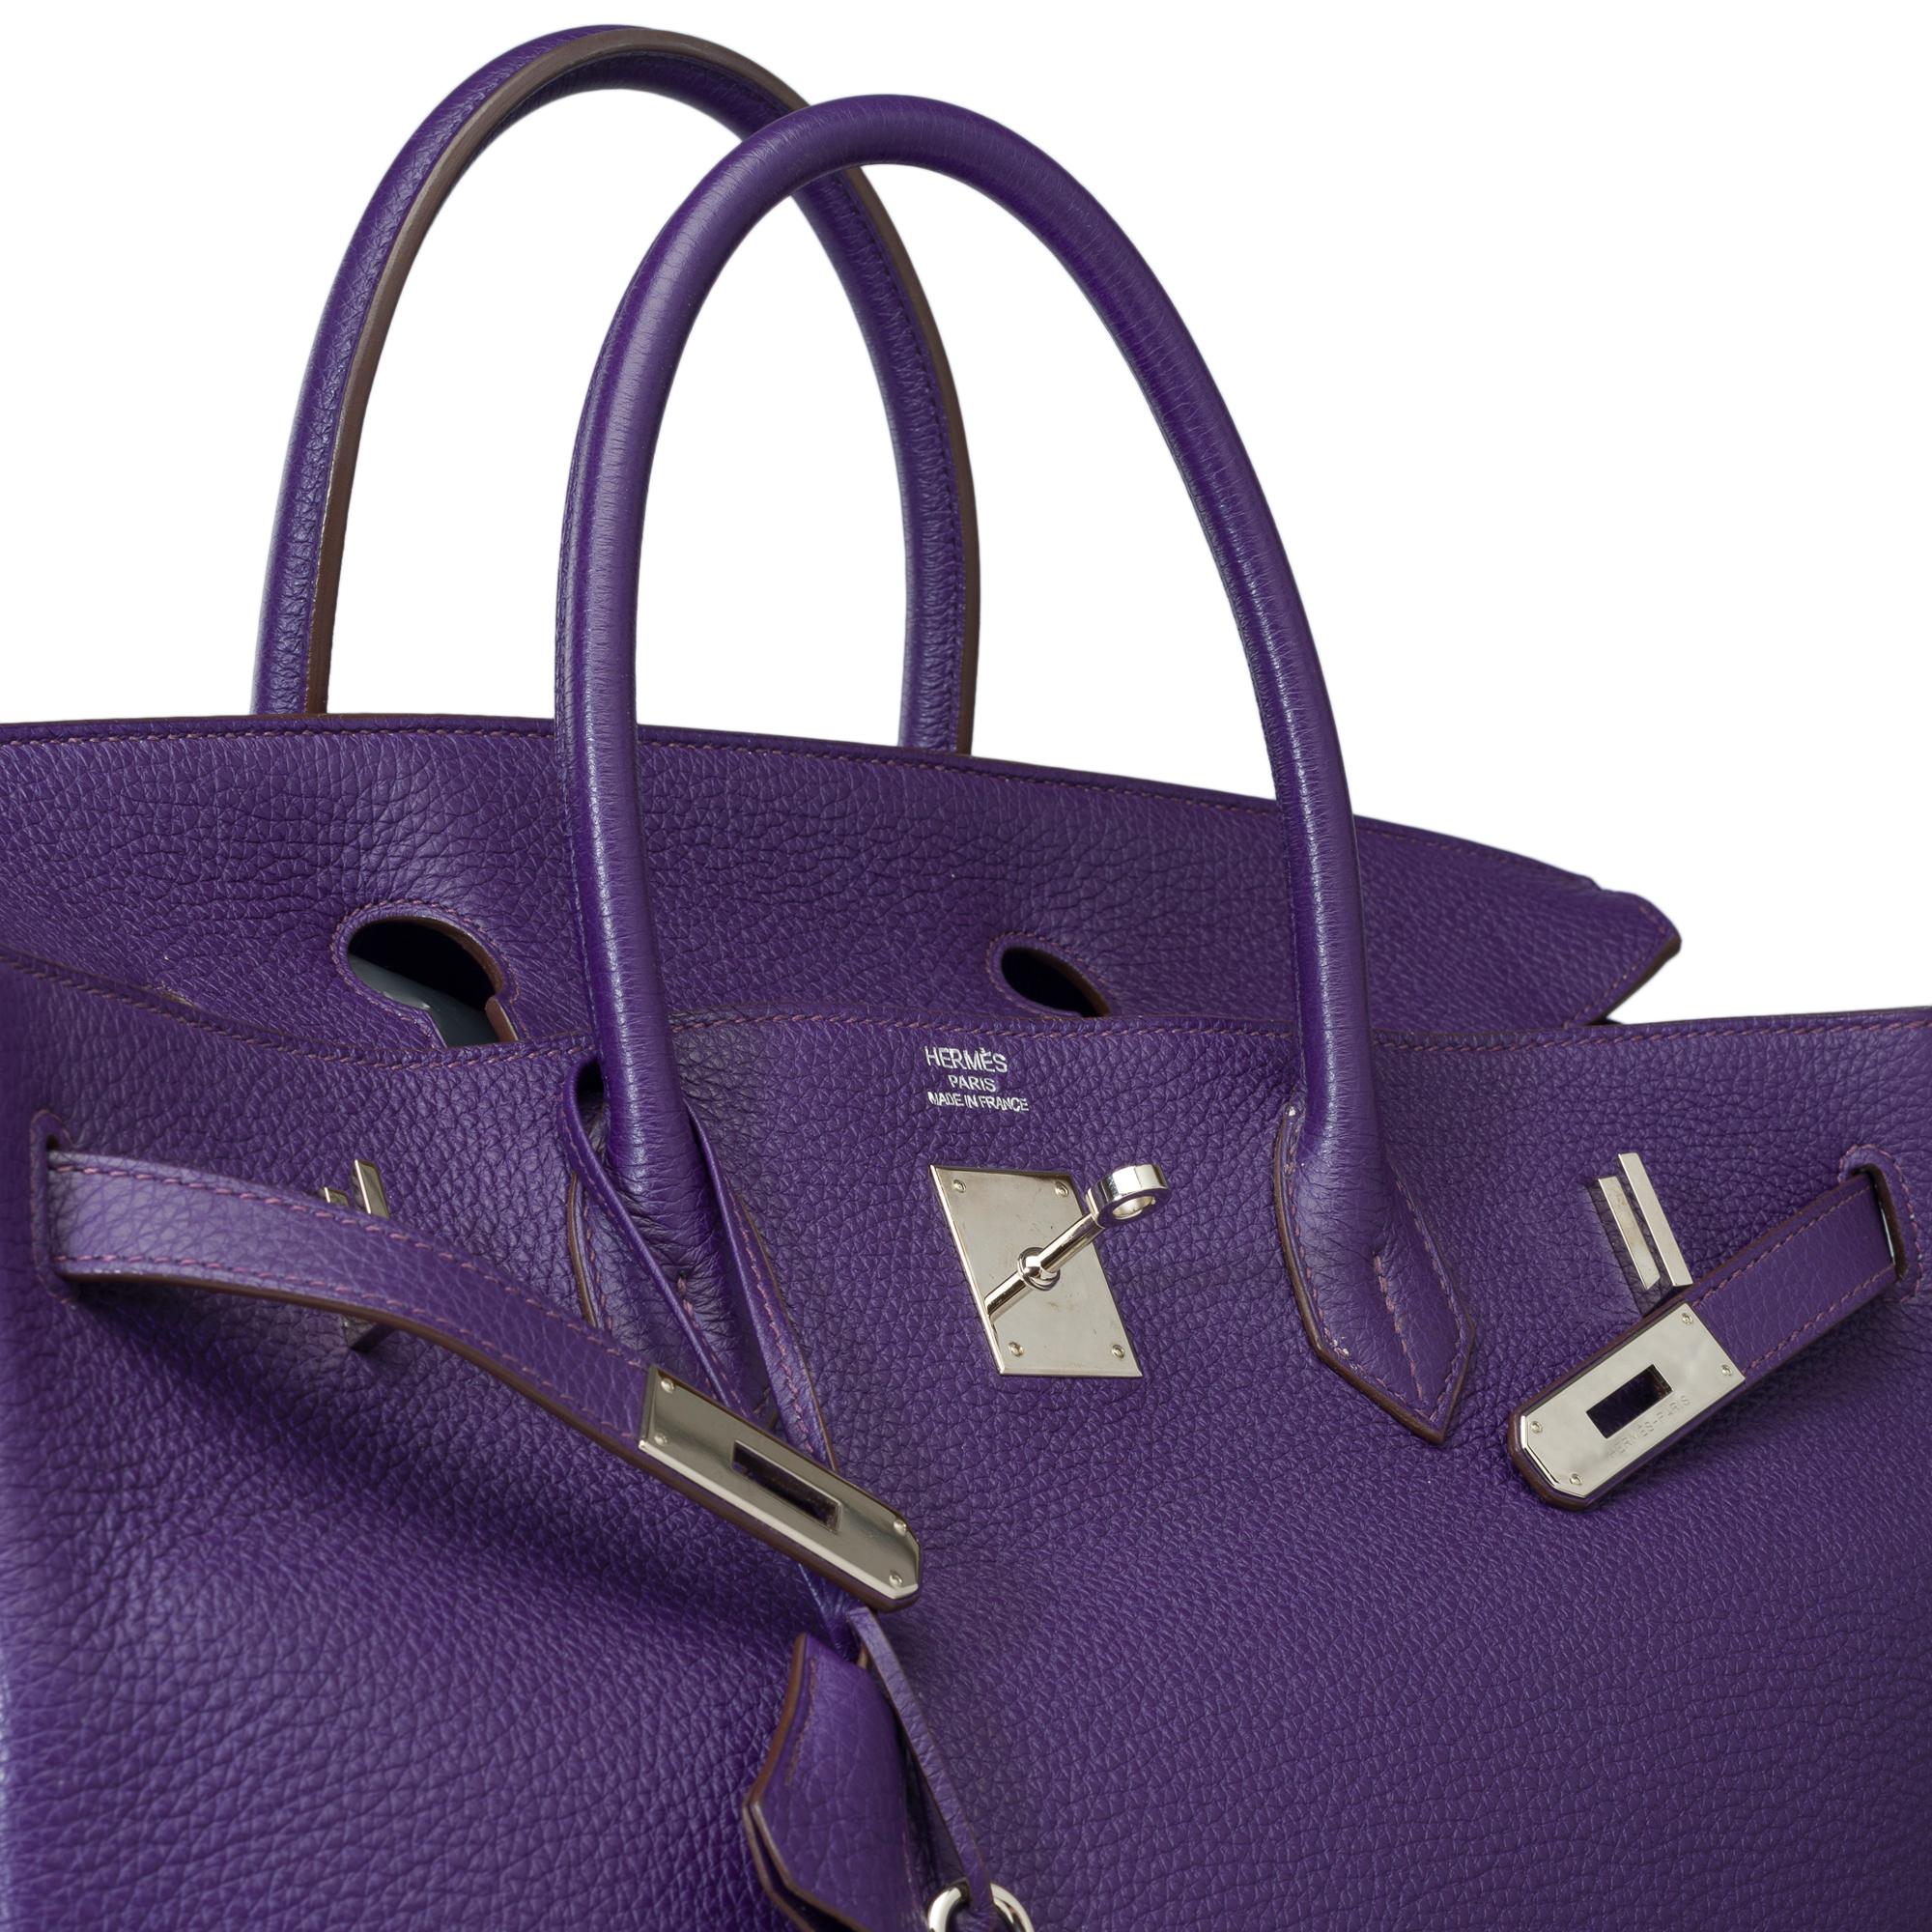 Classy & Rare Hermes Birkin 40 handbag in Iris Purple Togo leather, SHW 2